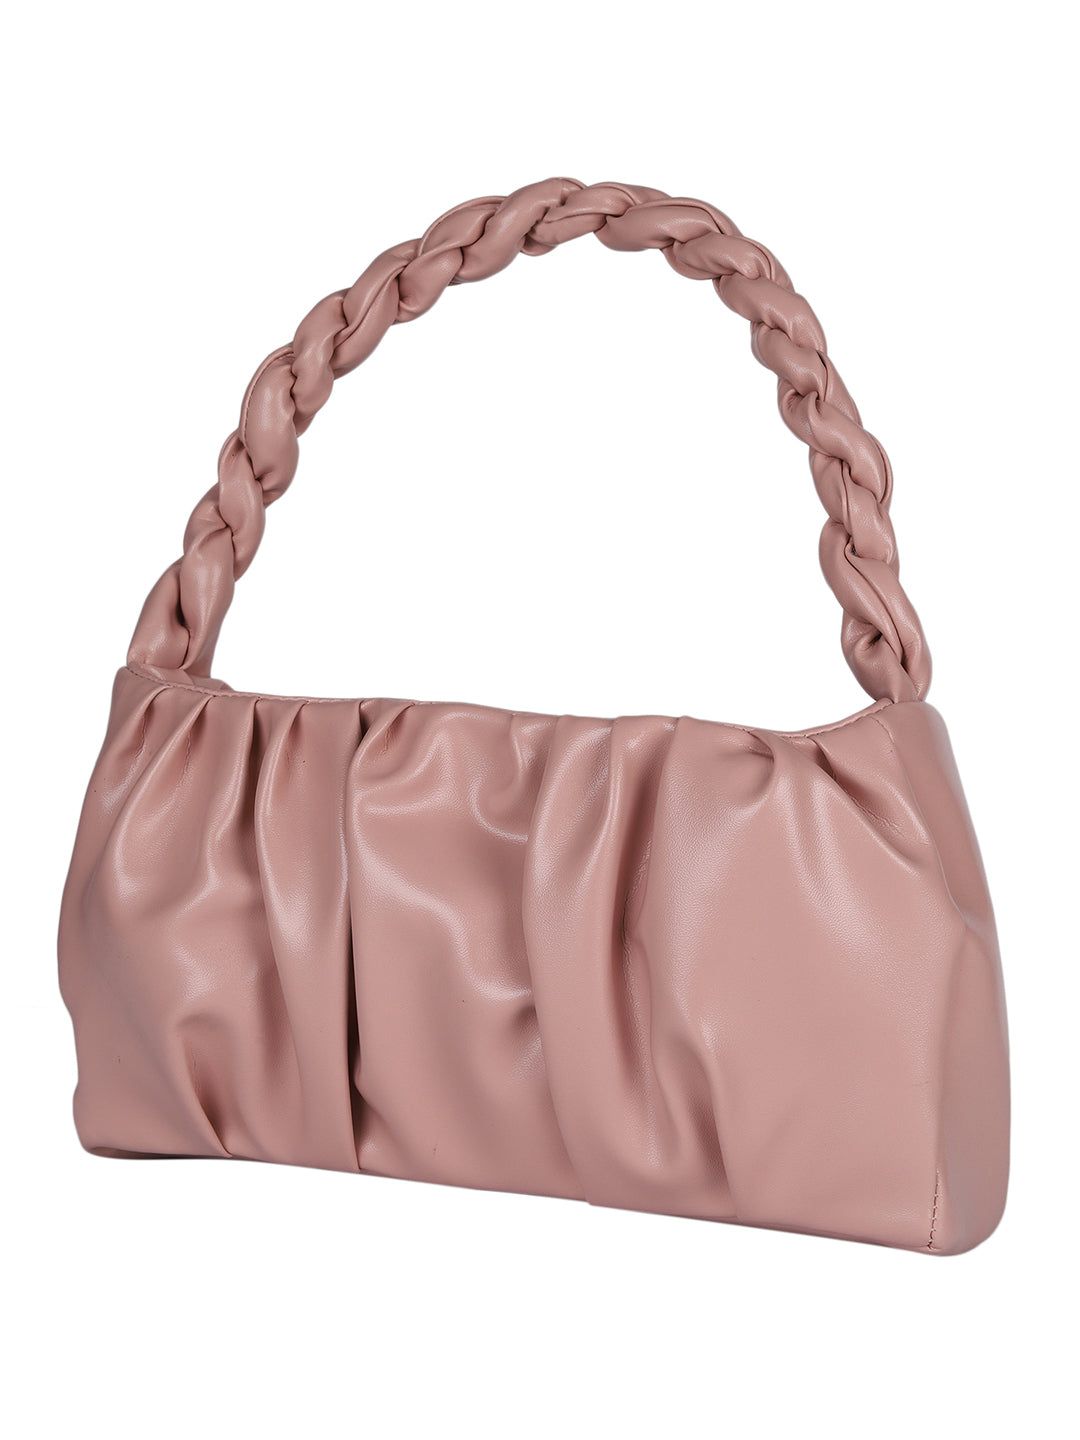 MINI WESST Pink Solid Handheld Bag(MWHB210PK)